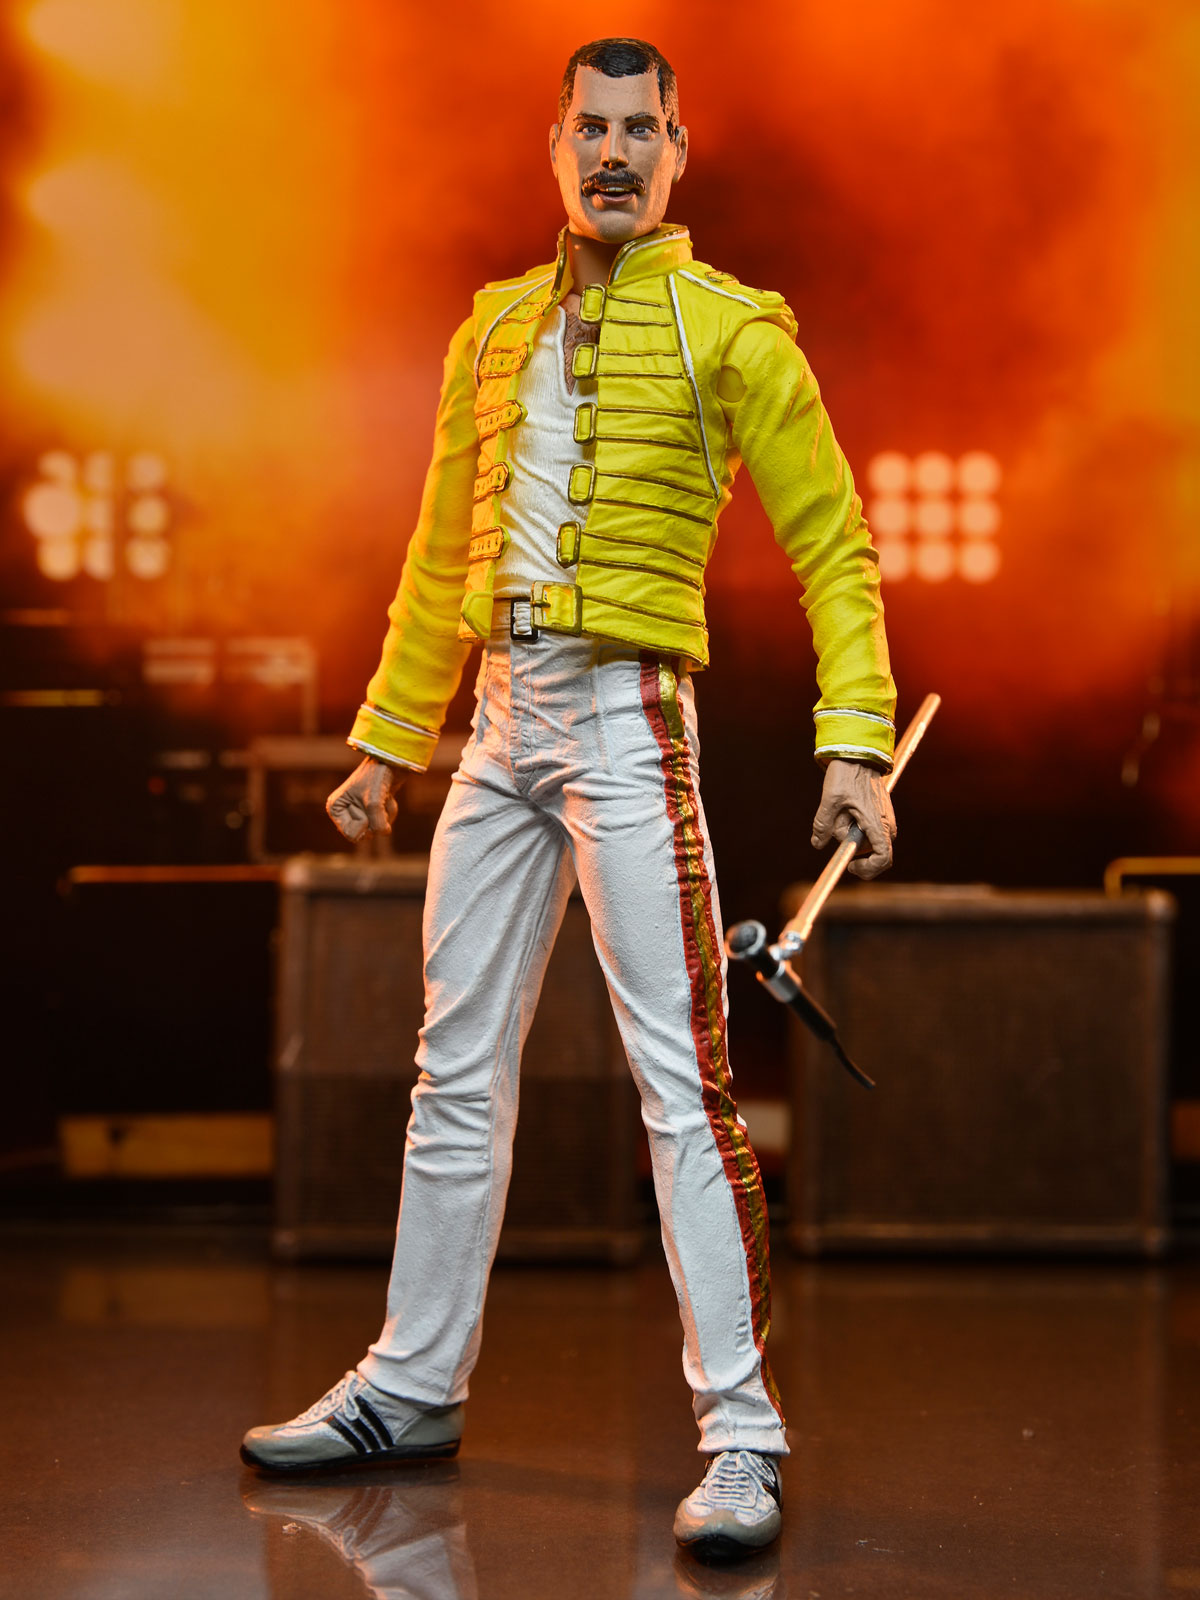 Freddie Mercury Jacket for Sale at Wembley Stadium